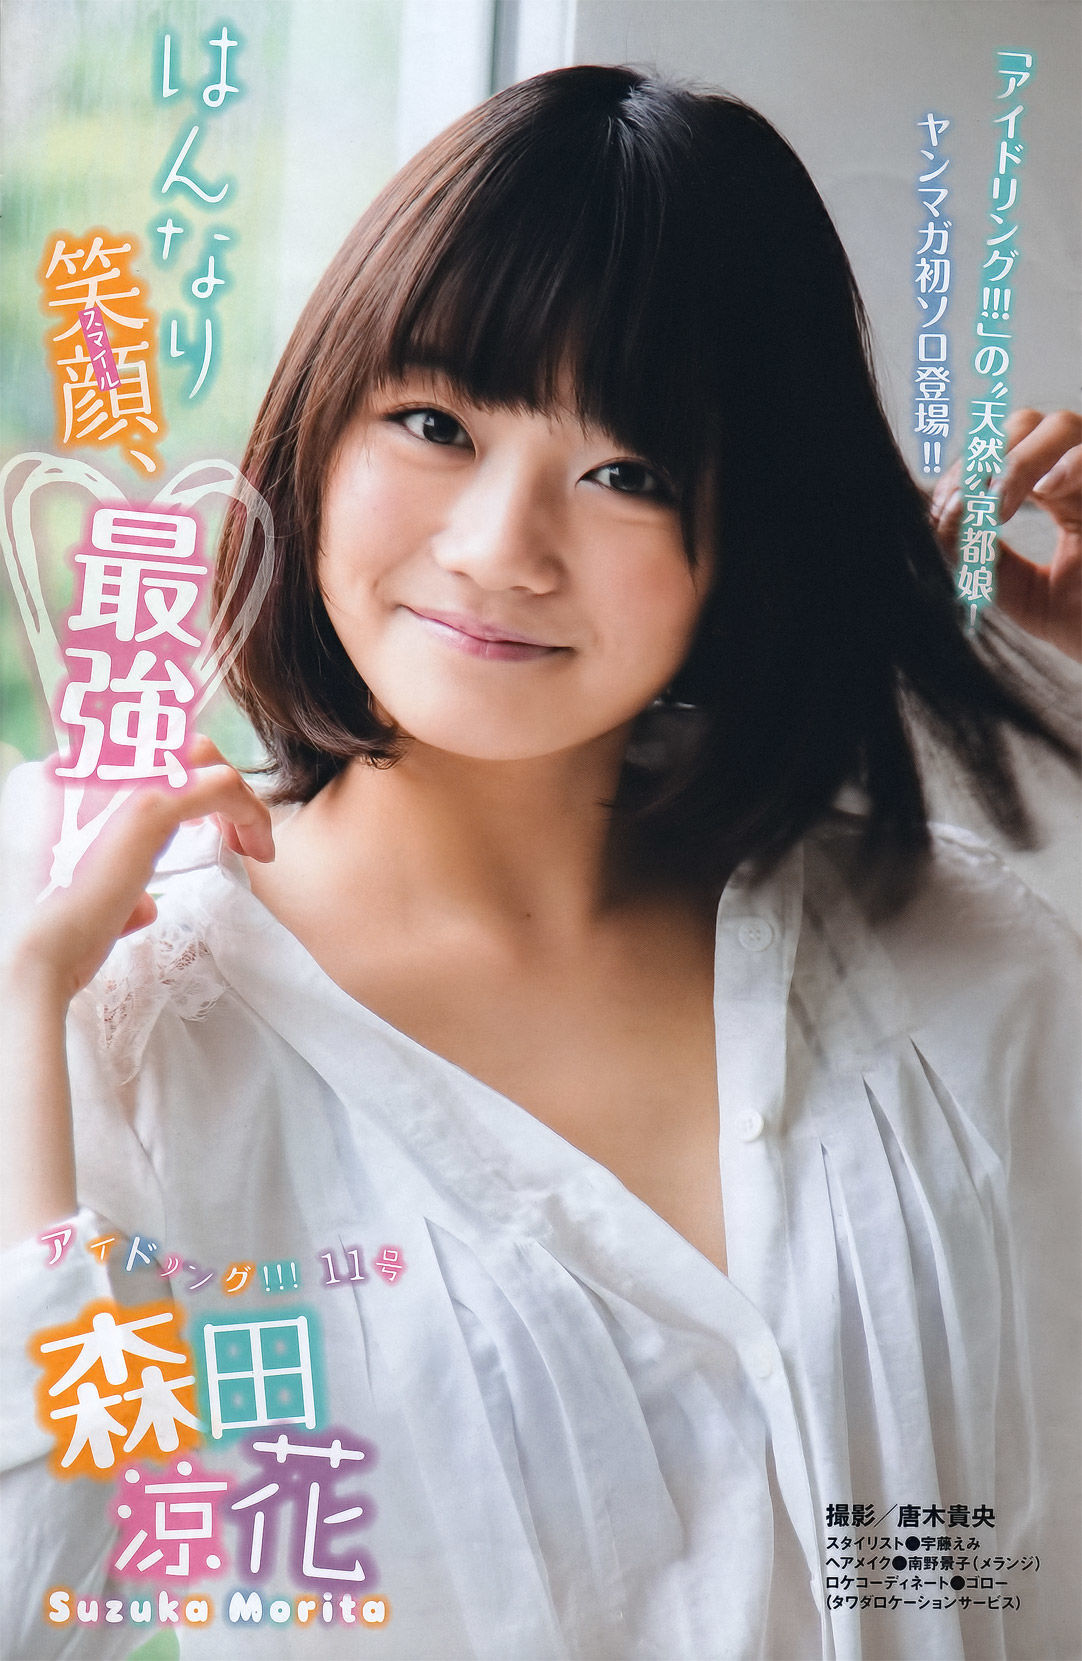 [Young Magazine] 2011年No.28 優木まおみ Maomi Yuuki